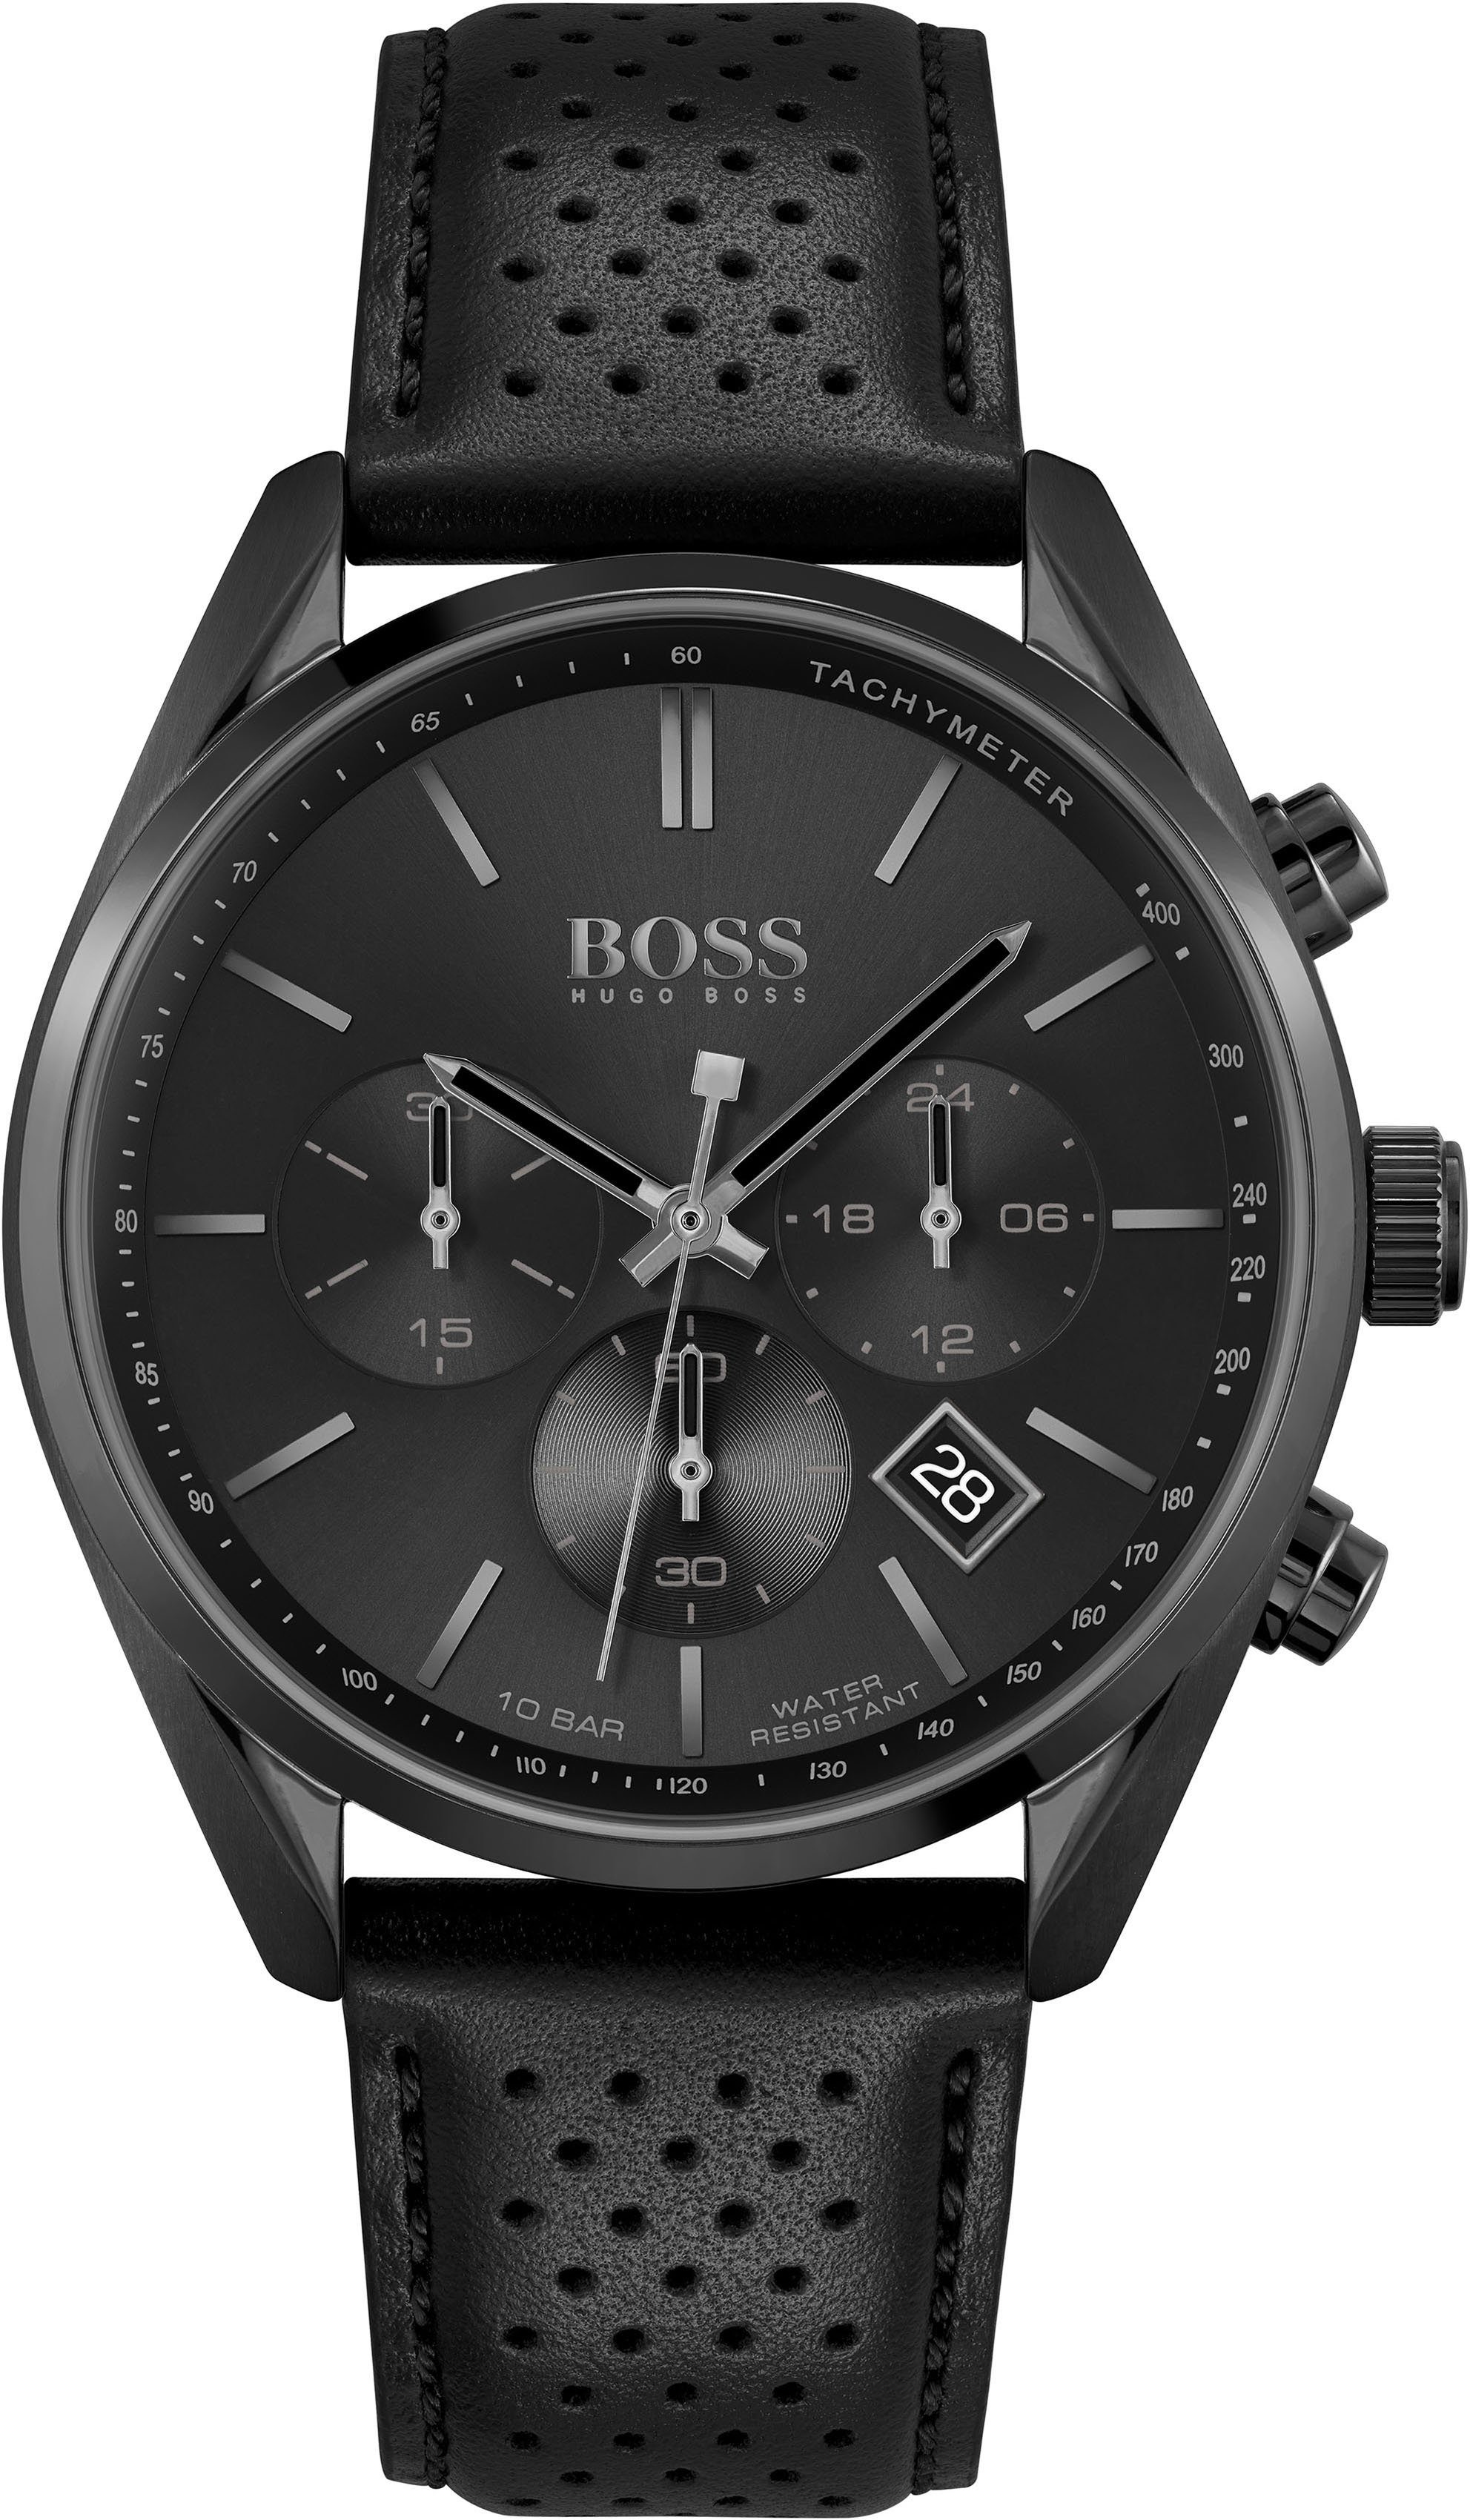 BOSS Chronograph Champion, 1513880, Quarzuhr, Herrenuhr, Armbanduhr, Stoppfunktion, Datum, Tachymeter